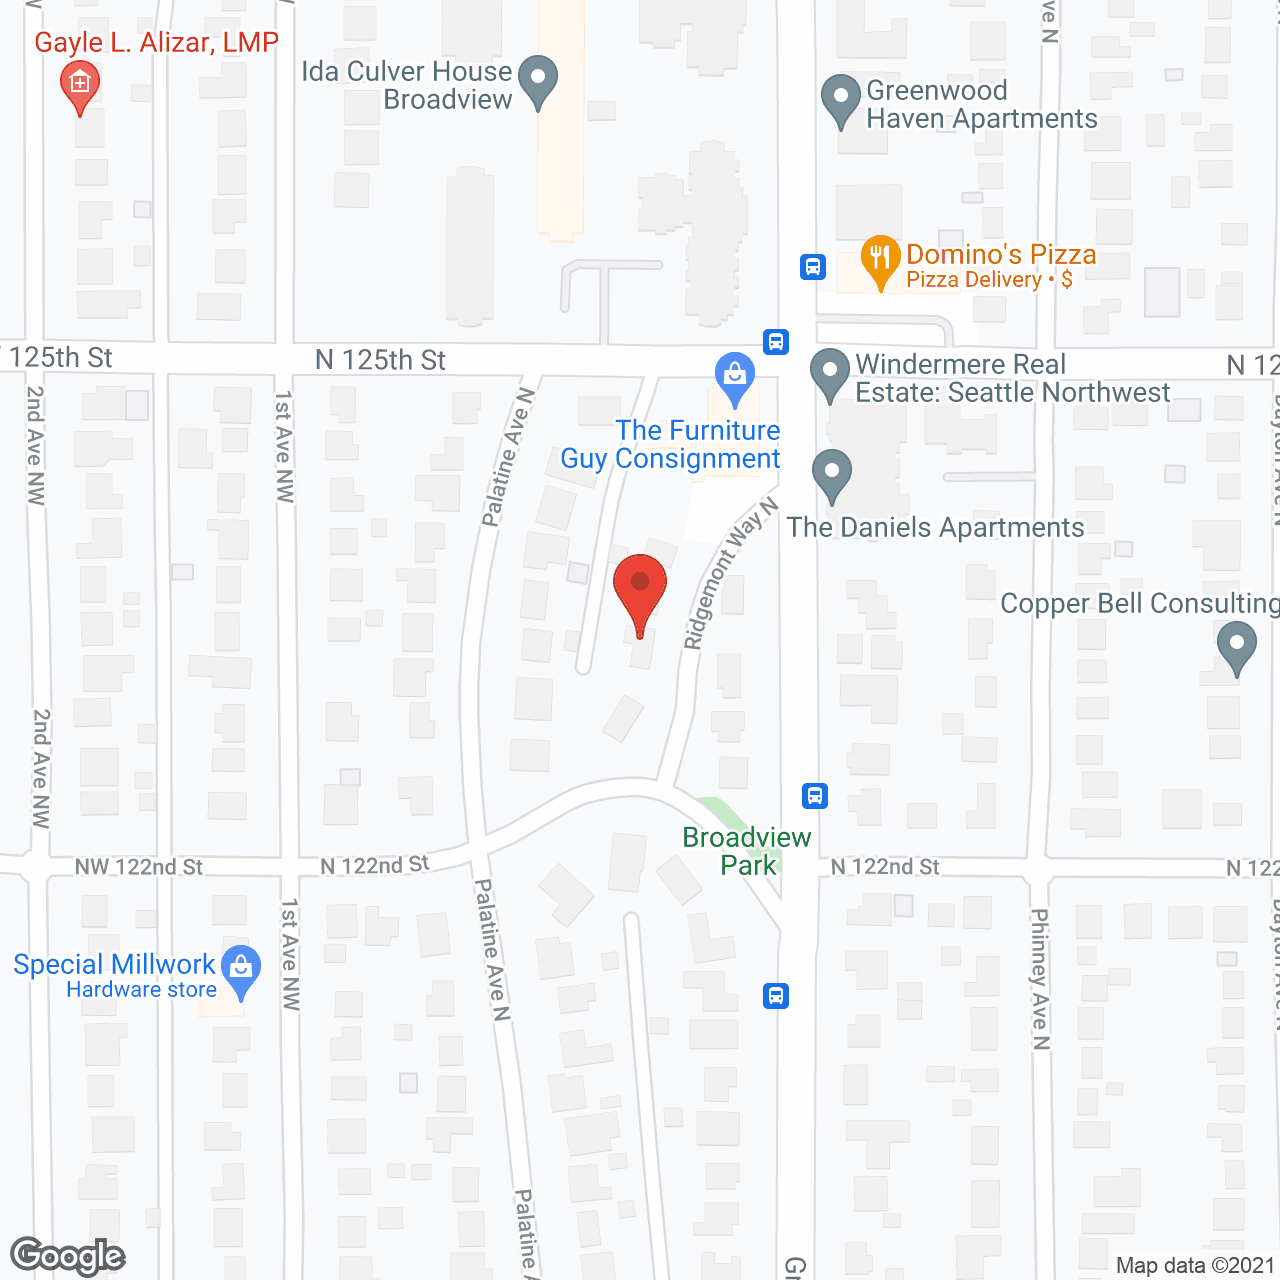 Gardenview Ridgemont in google map